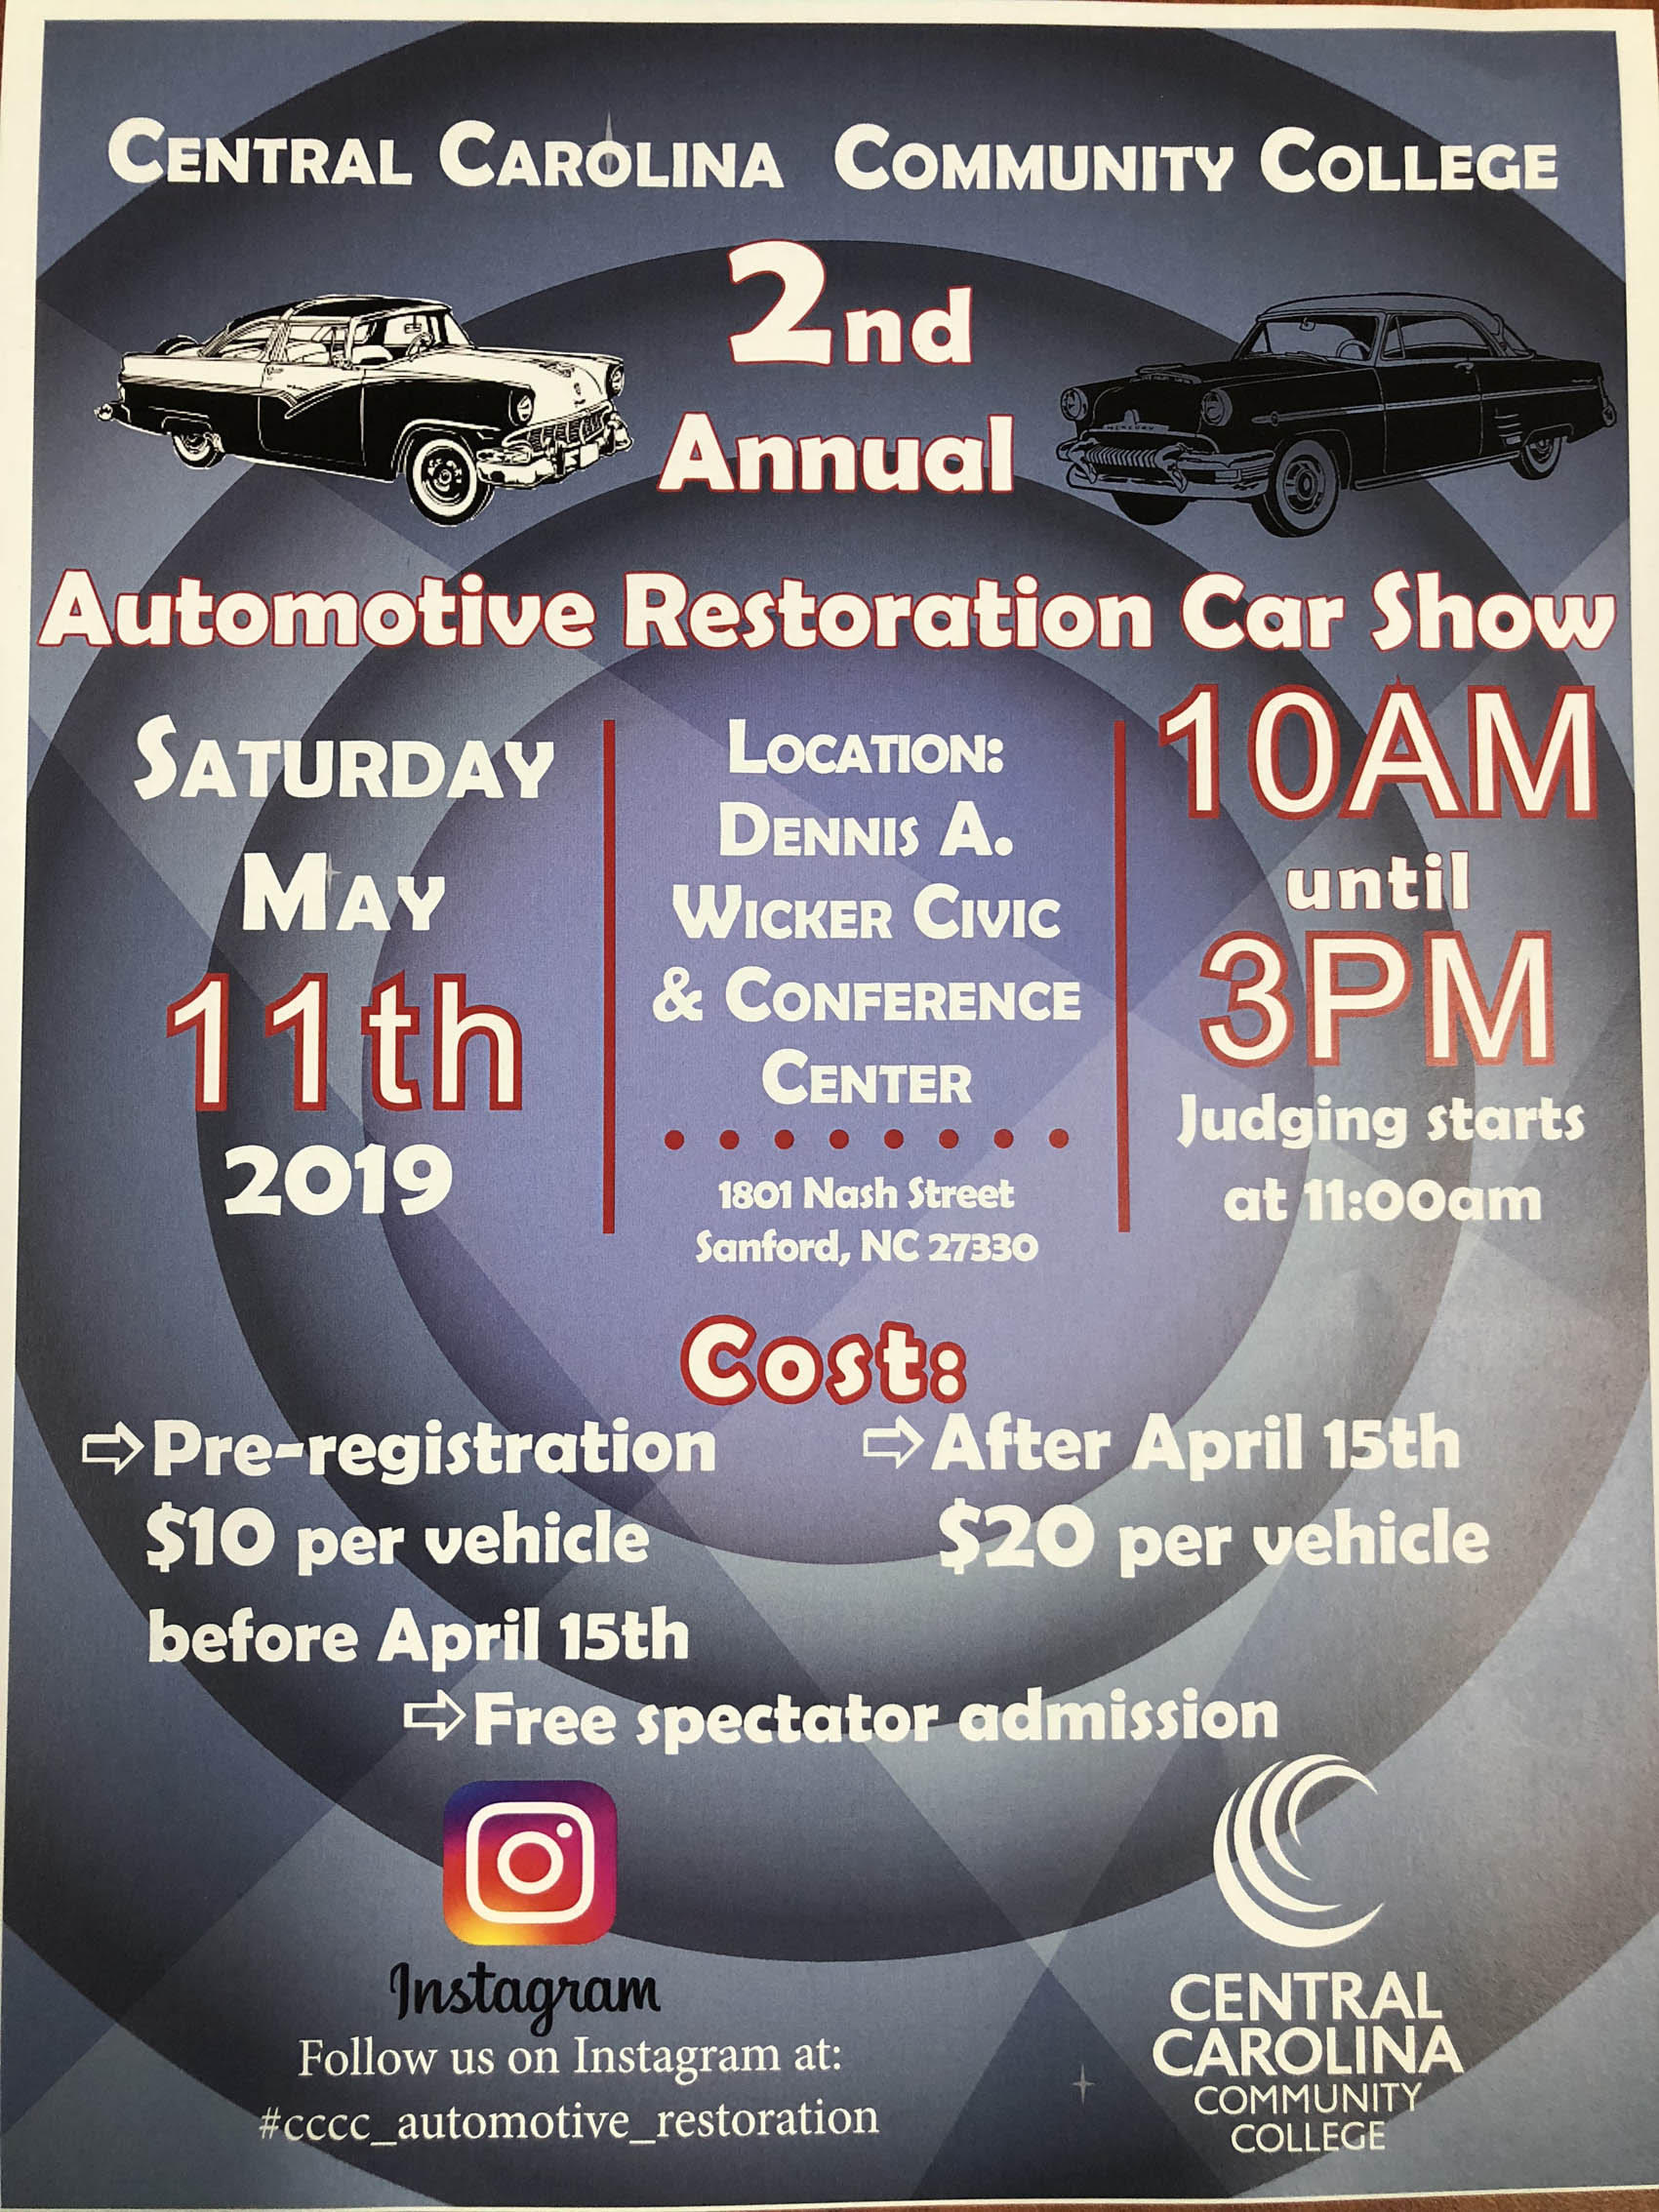 CCCC Automotive Restoration Car Show set for May 11